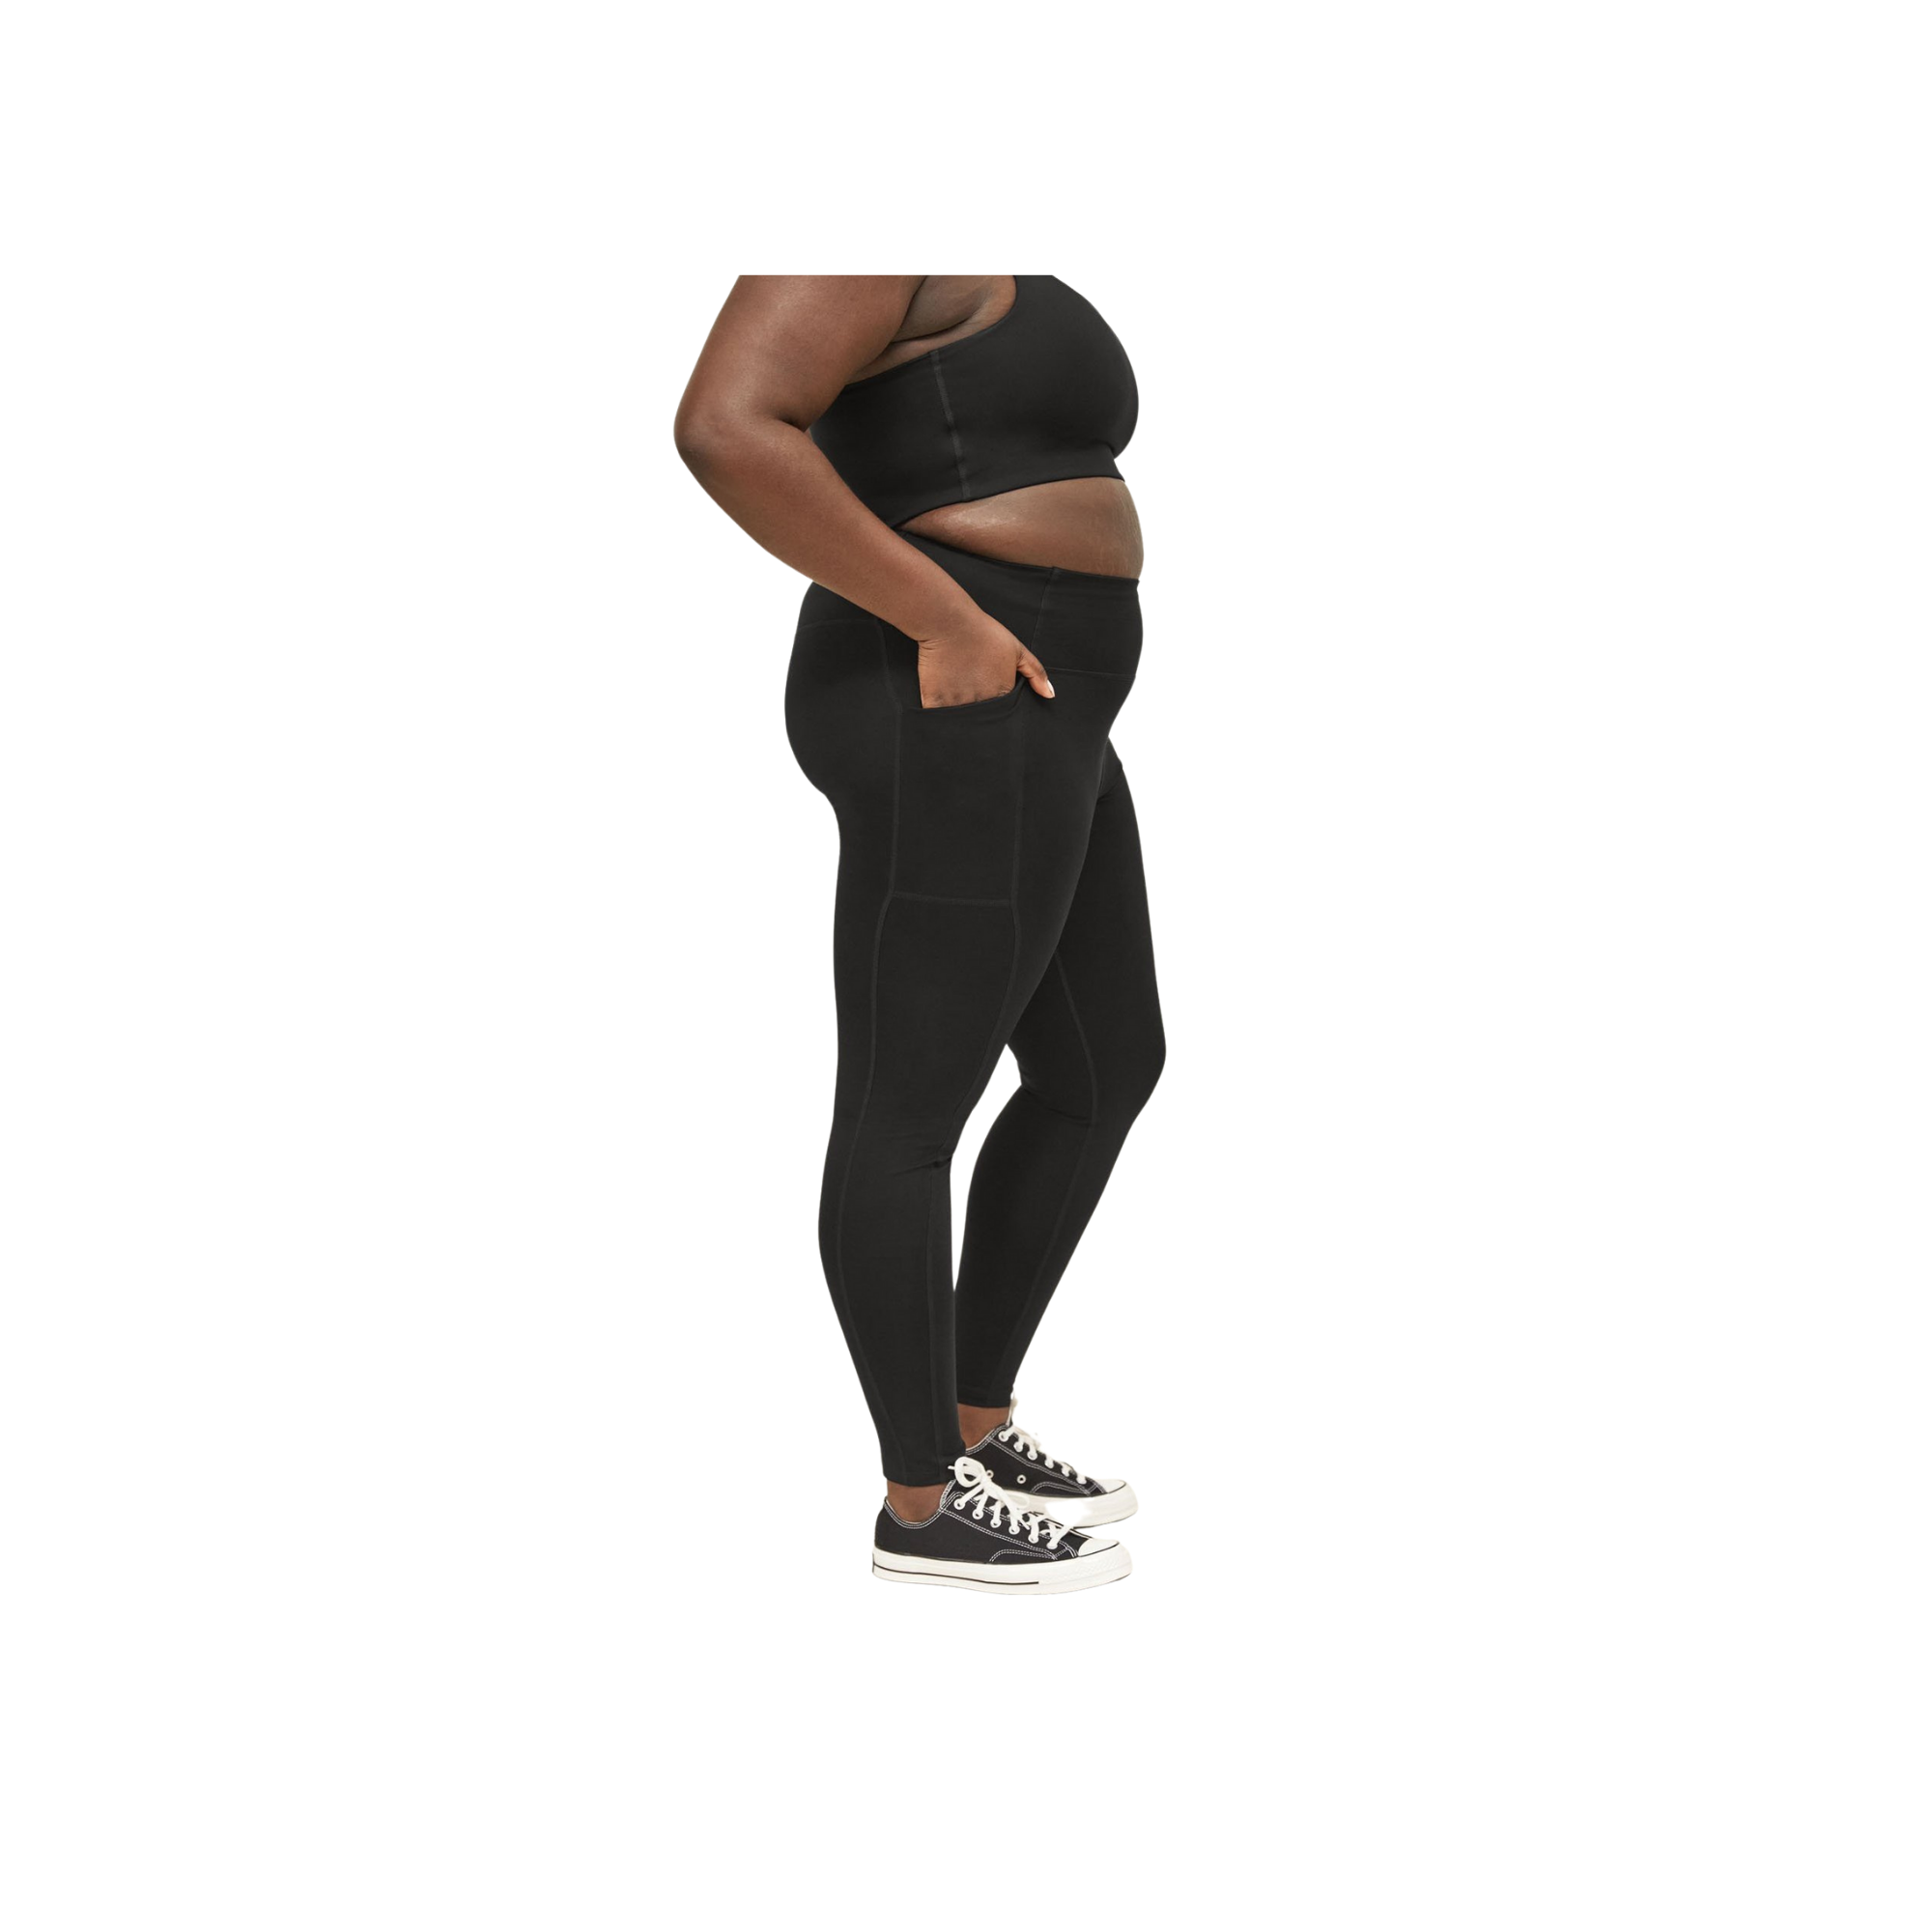 Being Runner High Waist Soft Flexible Gym Leggings  Black Yoga Pant Tights   Plus Size Bottom Activewear  Regular Stylish Pants With Pocket Black  Bottom Neon Green  Black Side 4 Strips